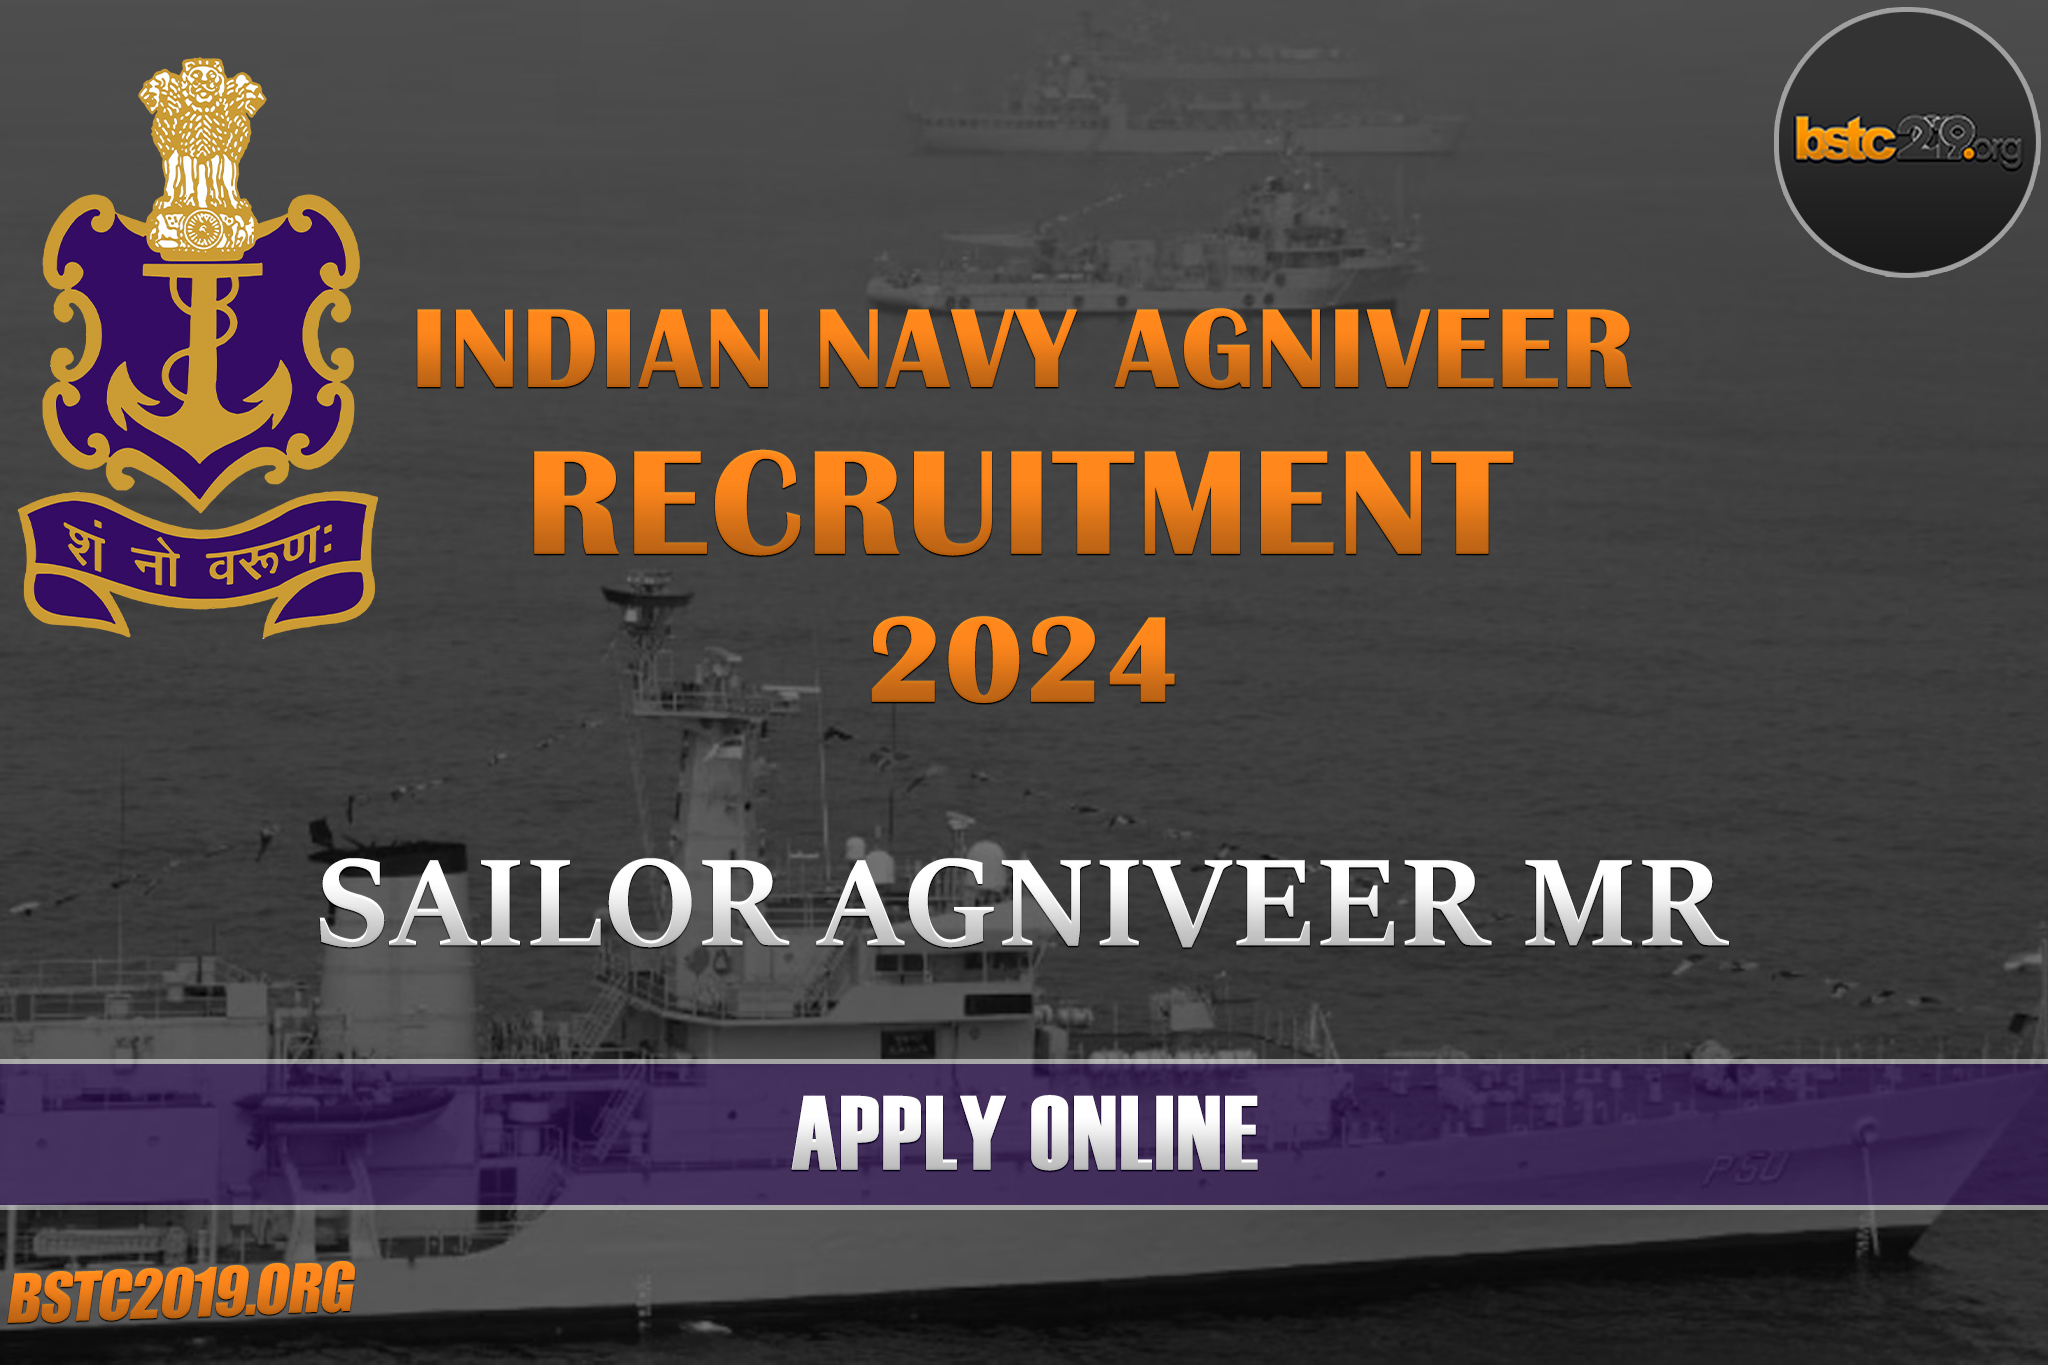 Indian Navy Agniveer Recruitment 202